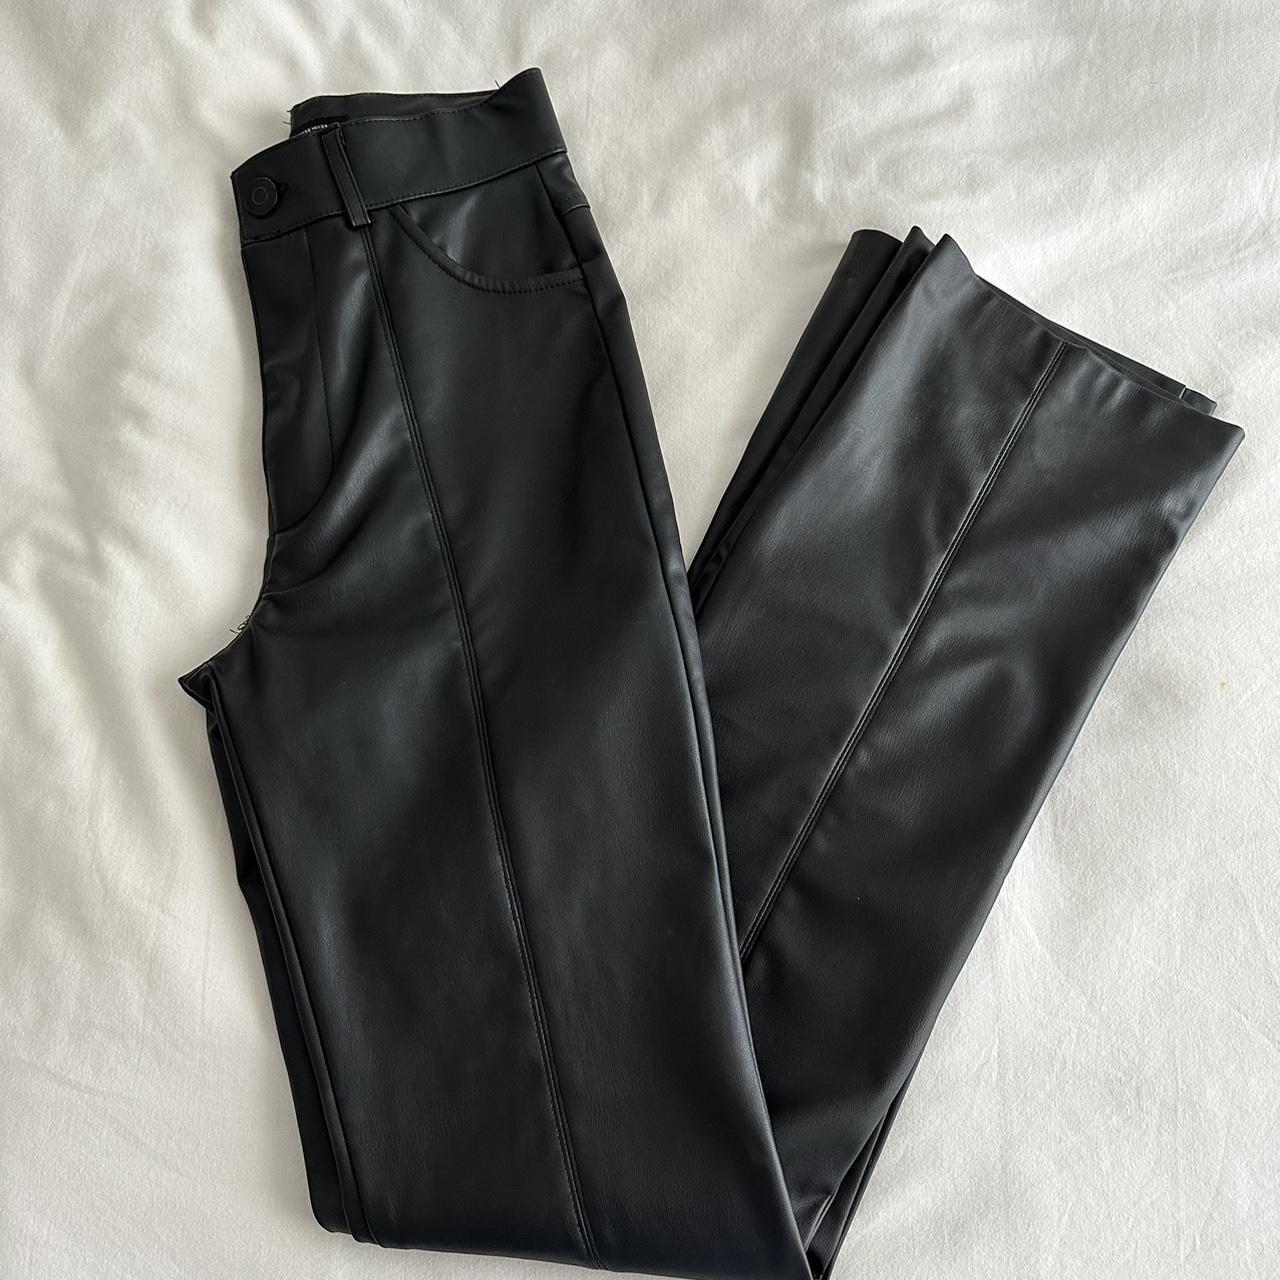 Women's Leather Pants ZARA United States, 56% OFF